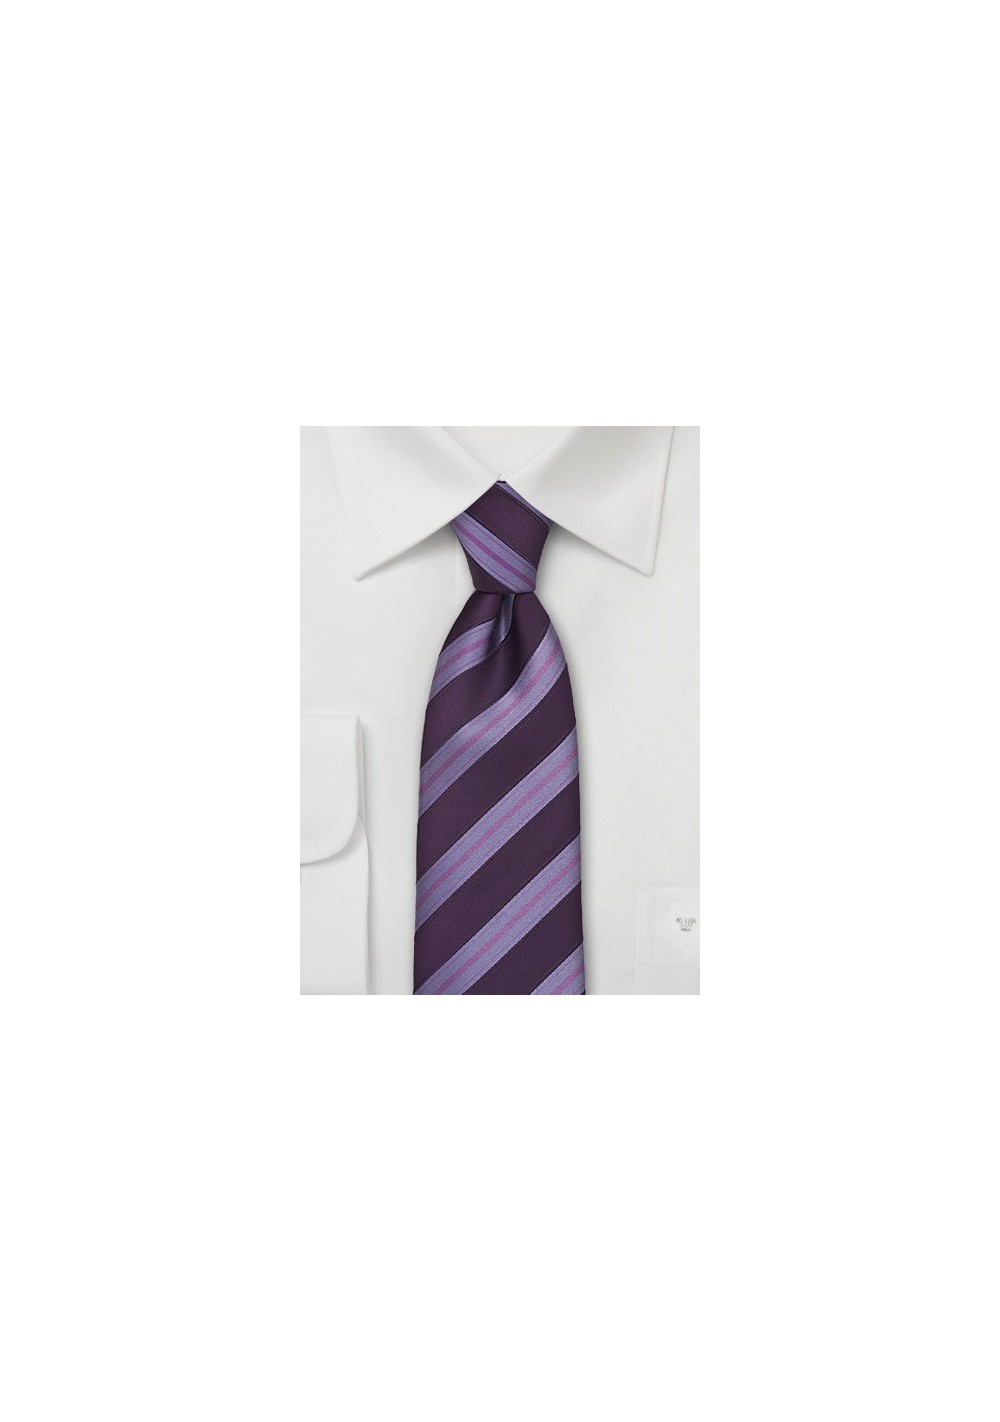 Silk Tie in Violet and Lavender